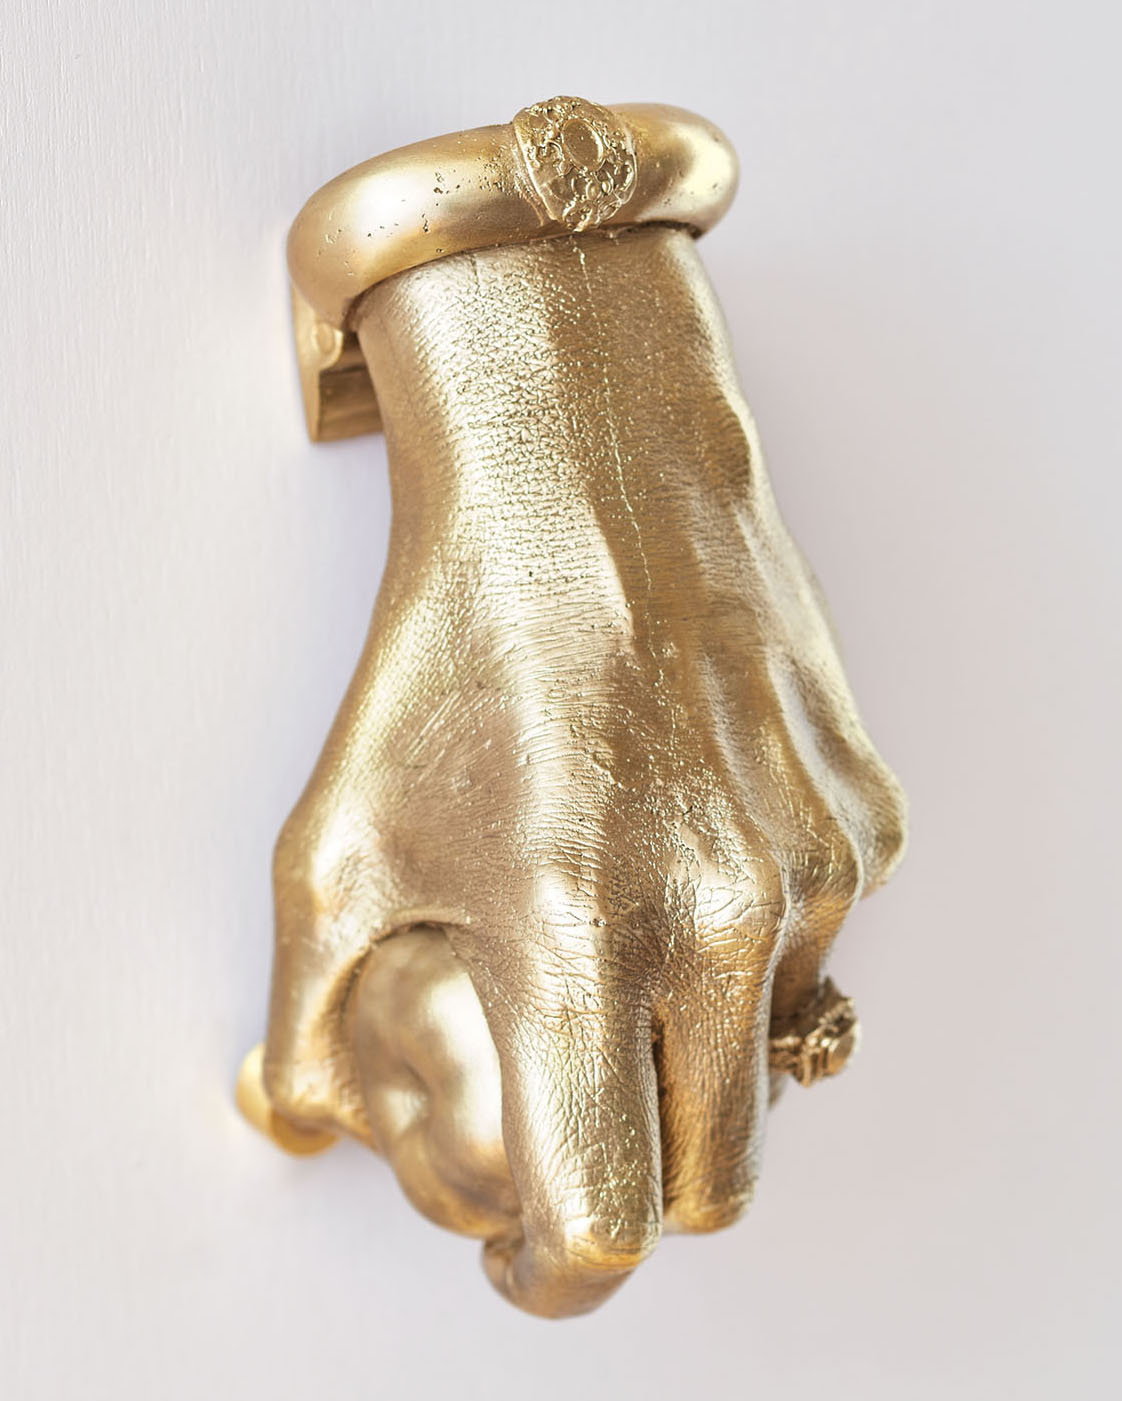 Brass door knocker shaped like a hand holding a pear